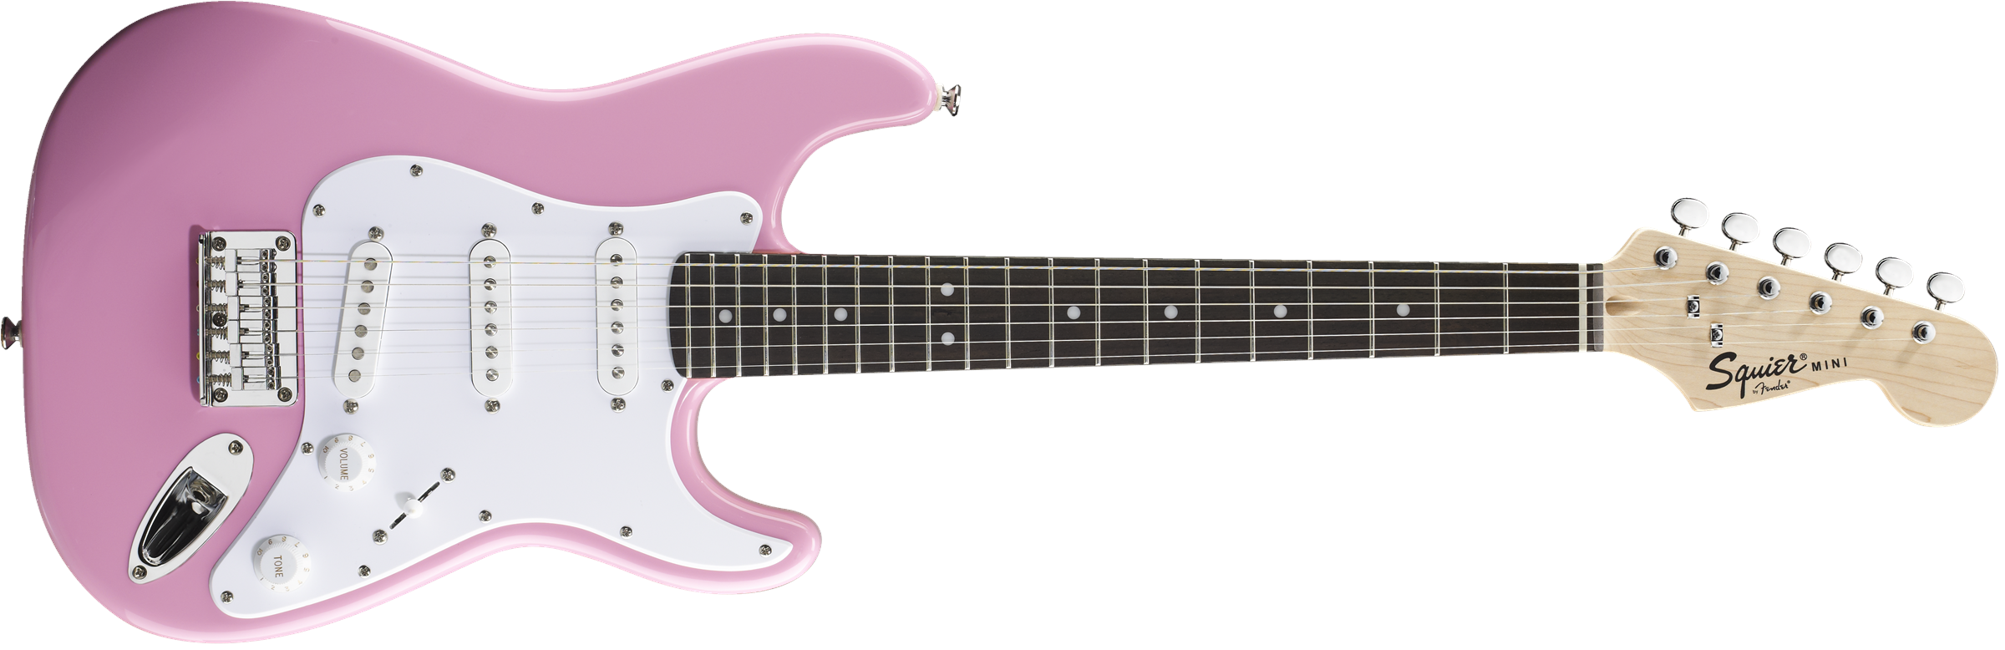 Fender Squier Mini Stratocaster 3/4 Size Elektrisk Guitar (Pink)